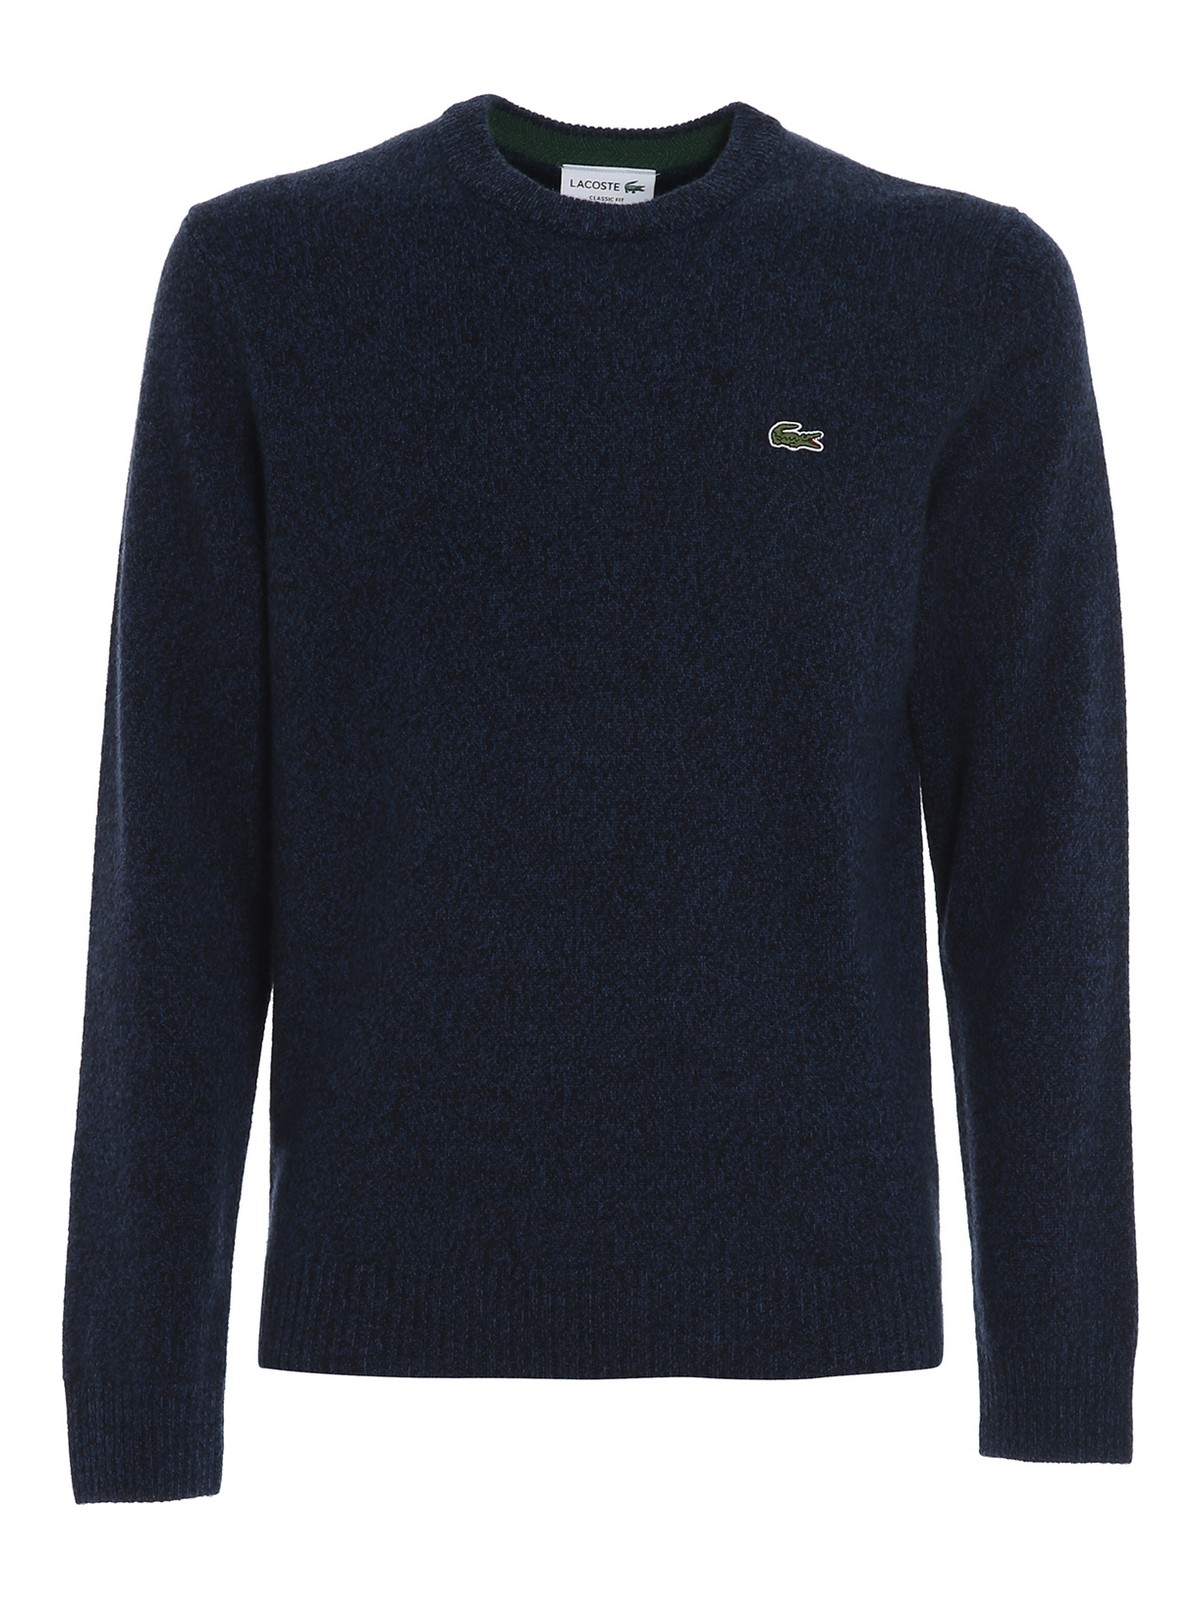 Lacoste - Pure wool jumper - crew necks - AH1988H96 | Shop online at iKRIX